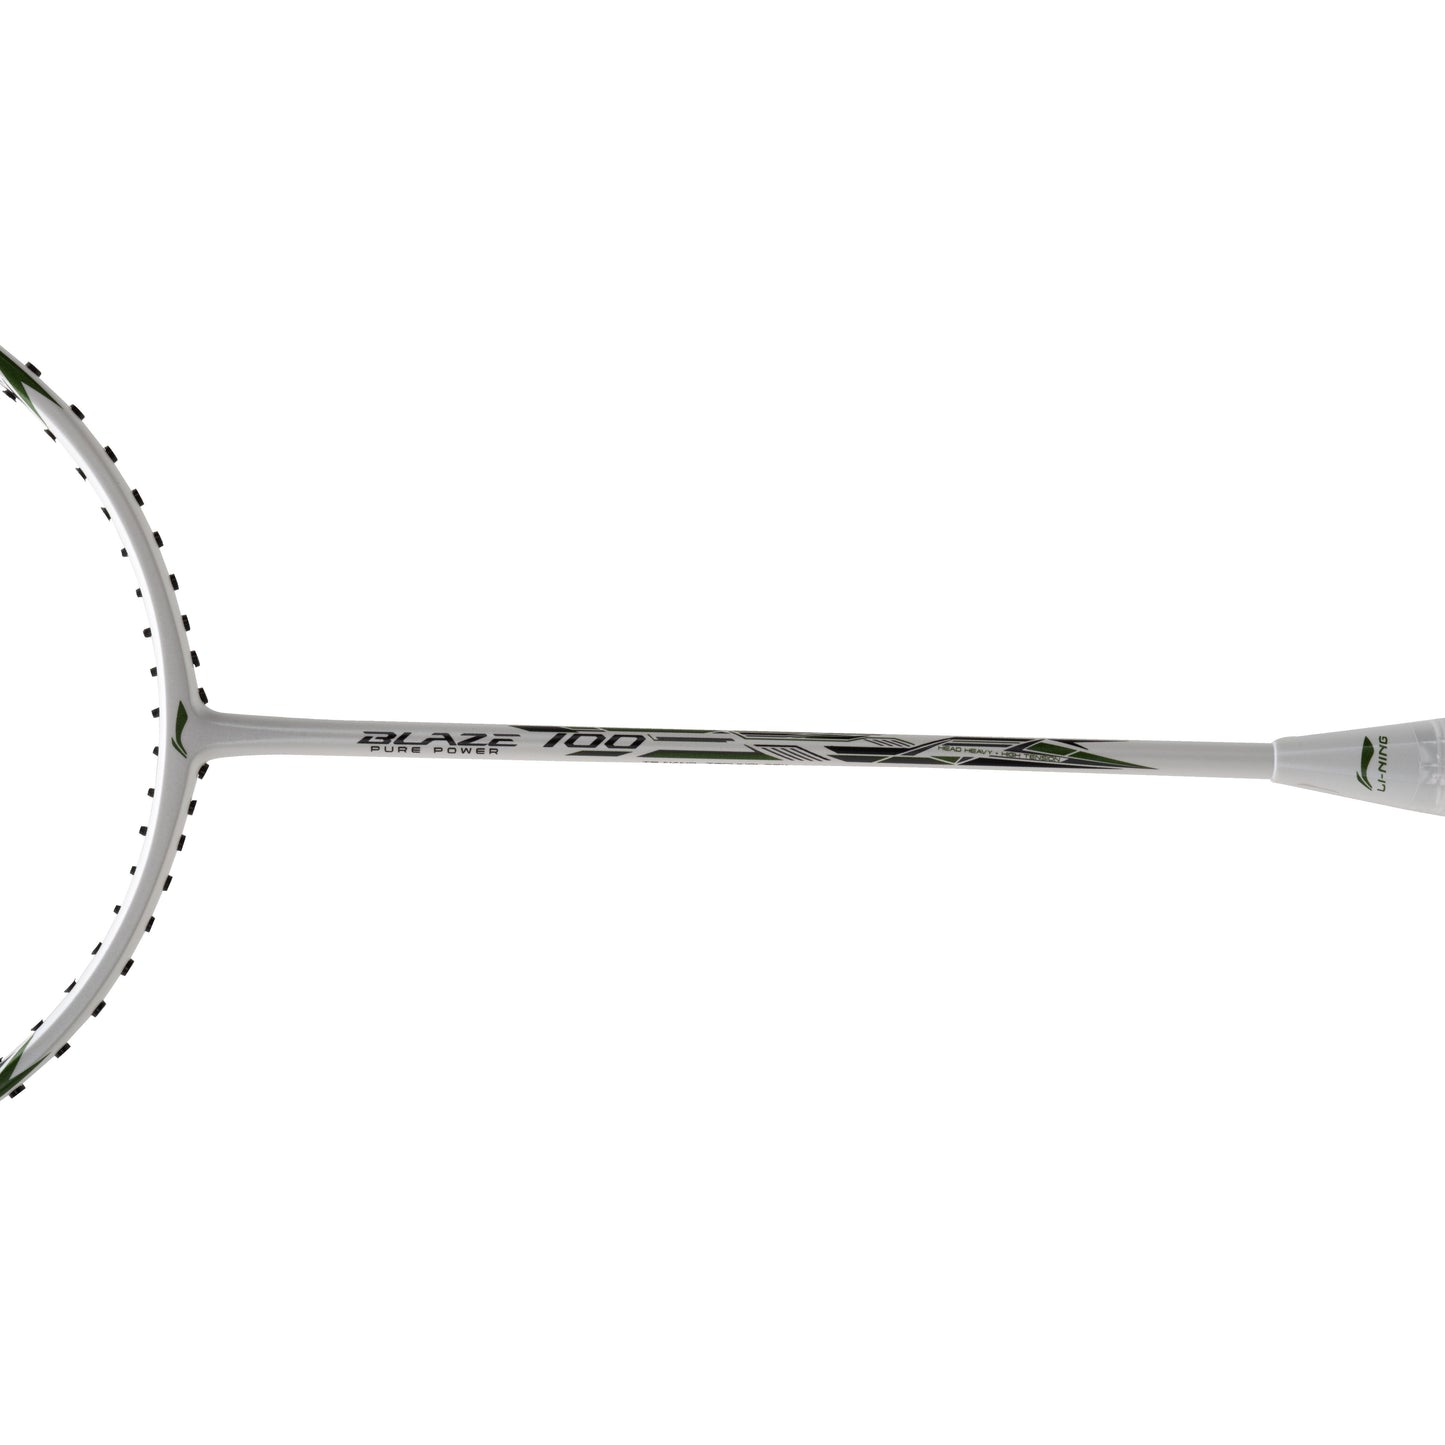 Li-Ning Blaze 100 Badminton Racket (Pearl White / Black / Emerald)